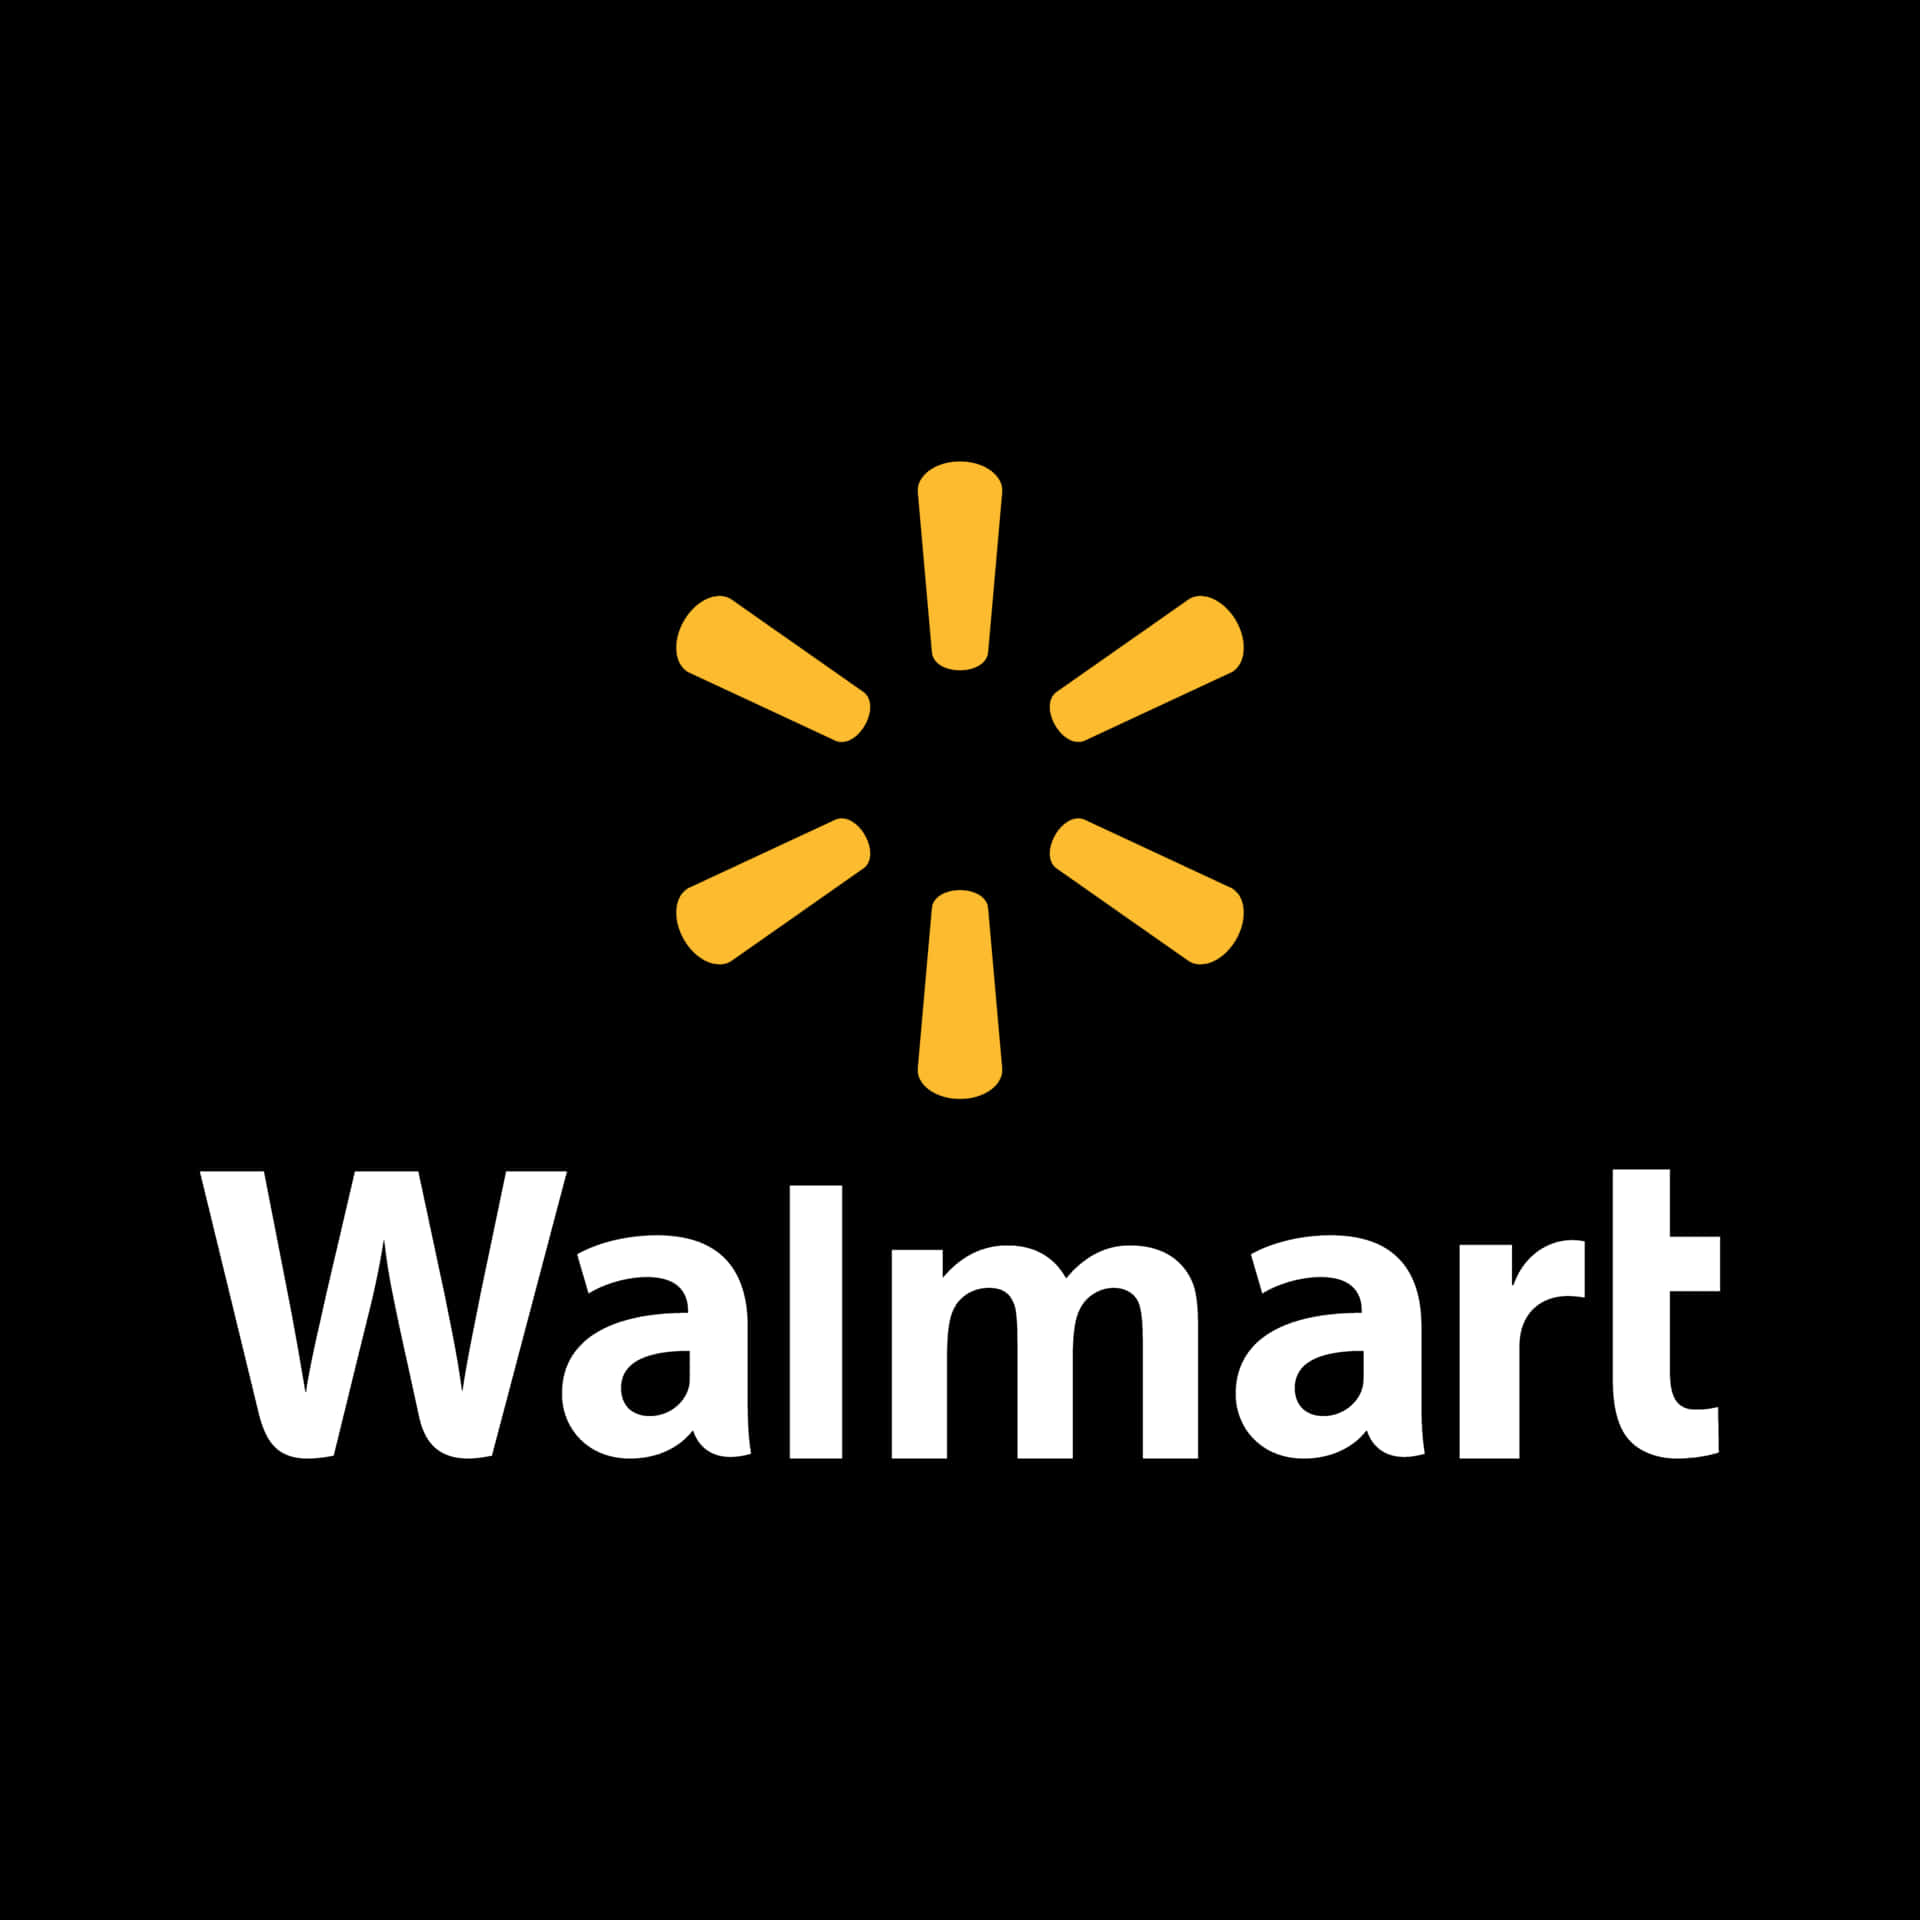 A Logo Of A Walmart Company